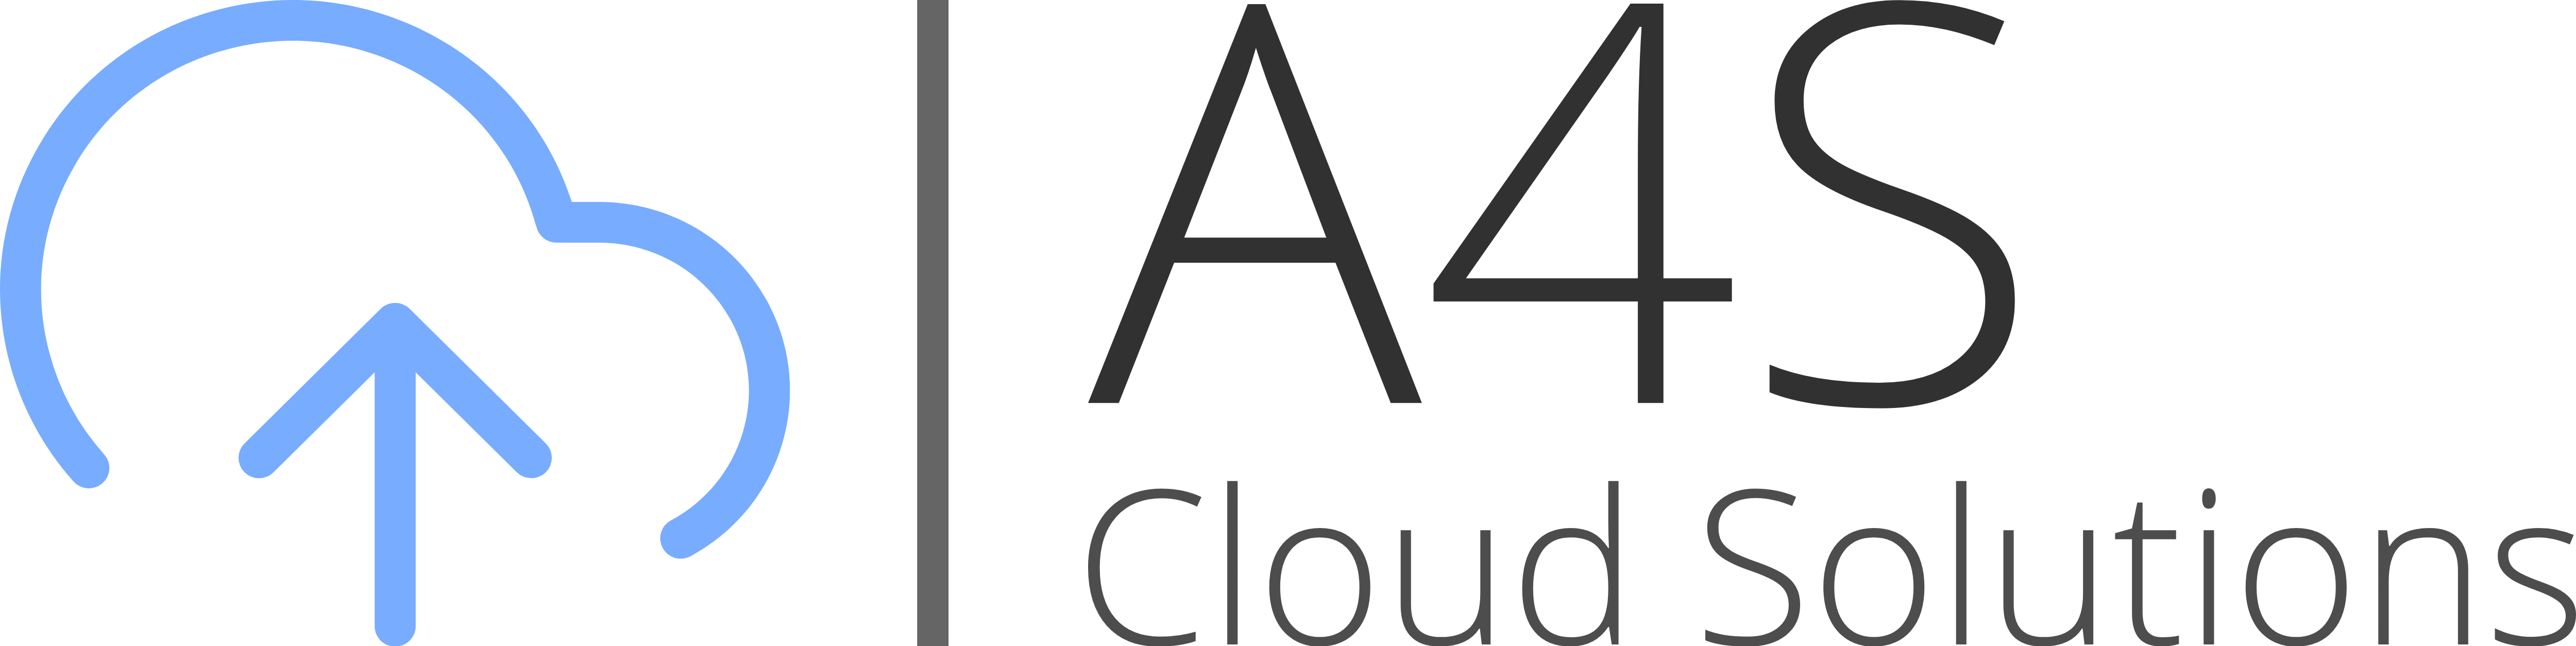 A4S Cloud solutions